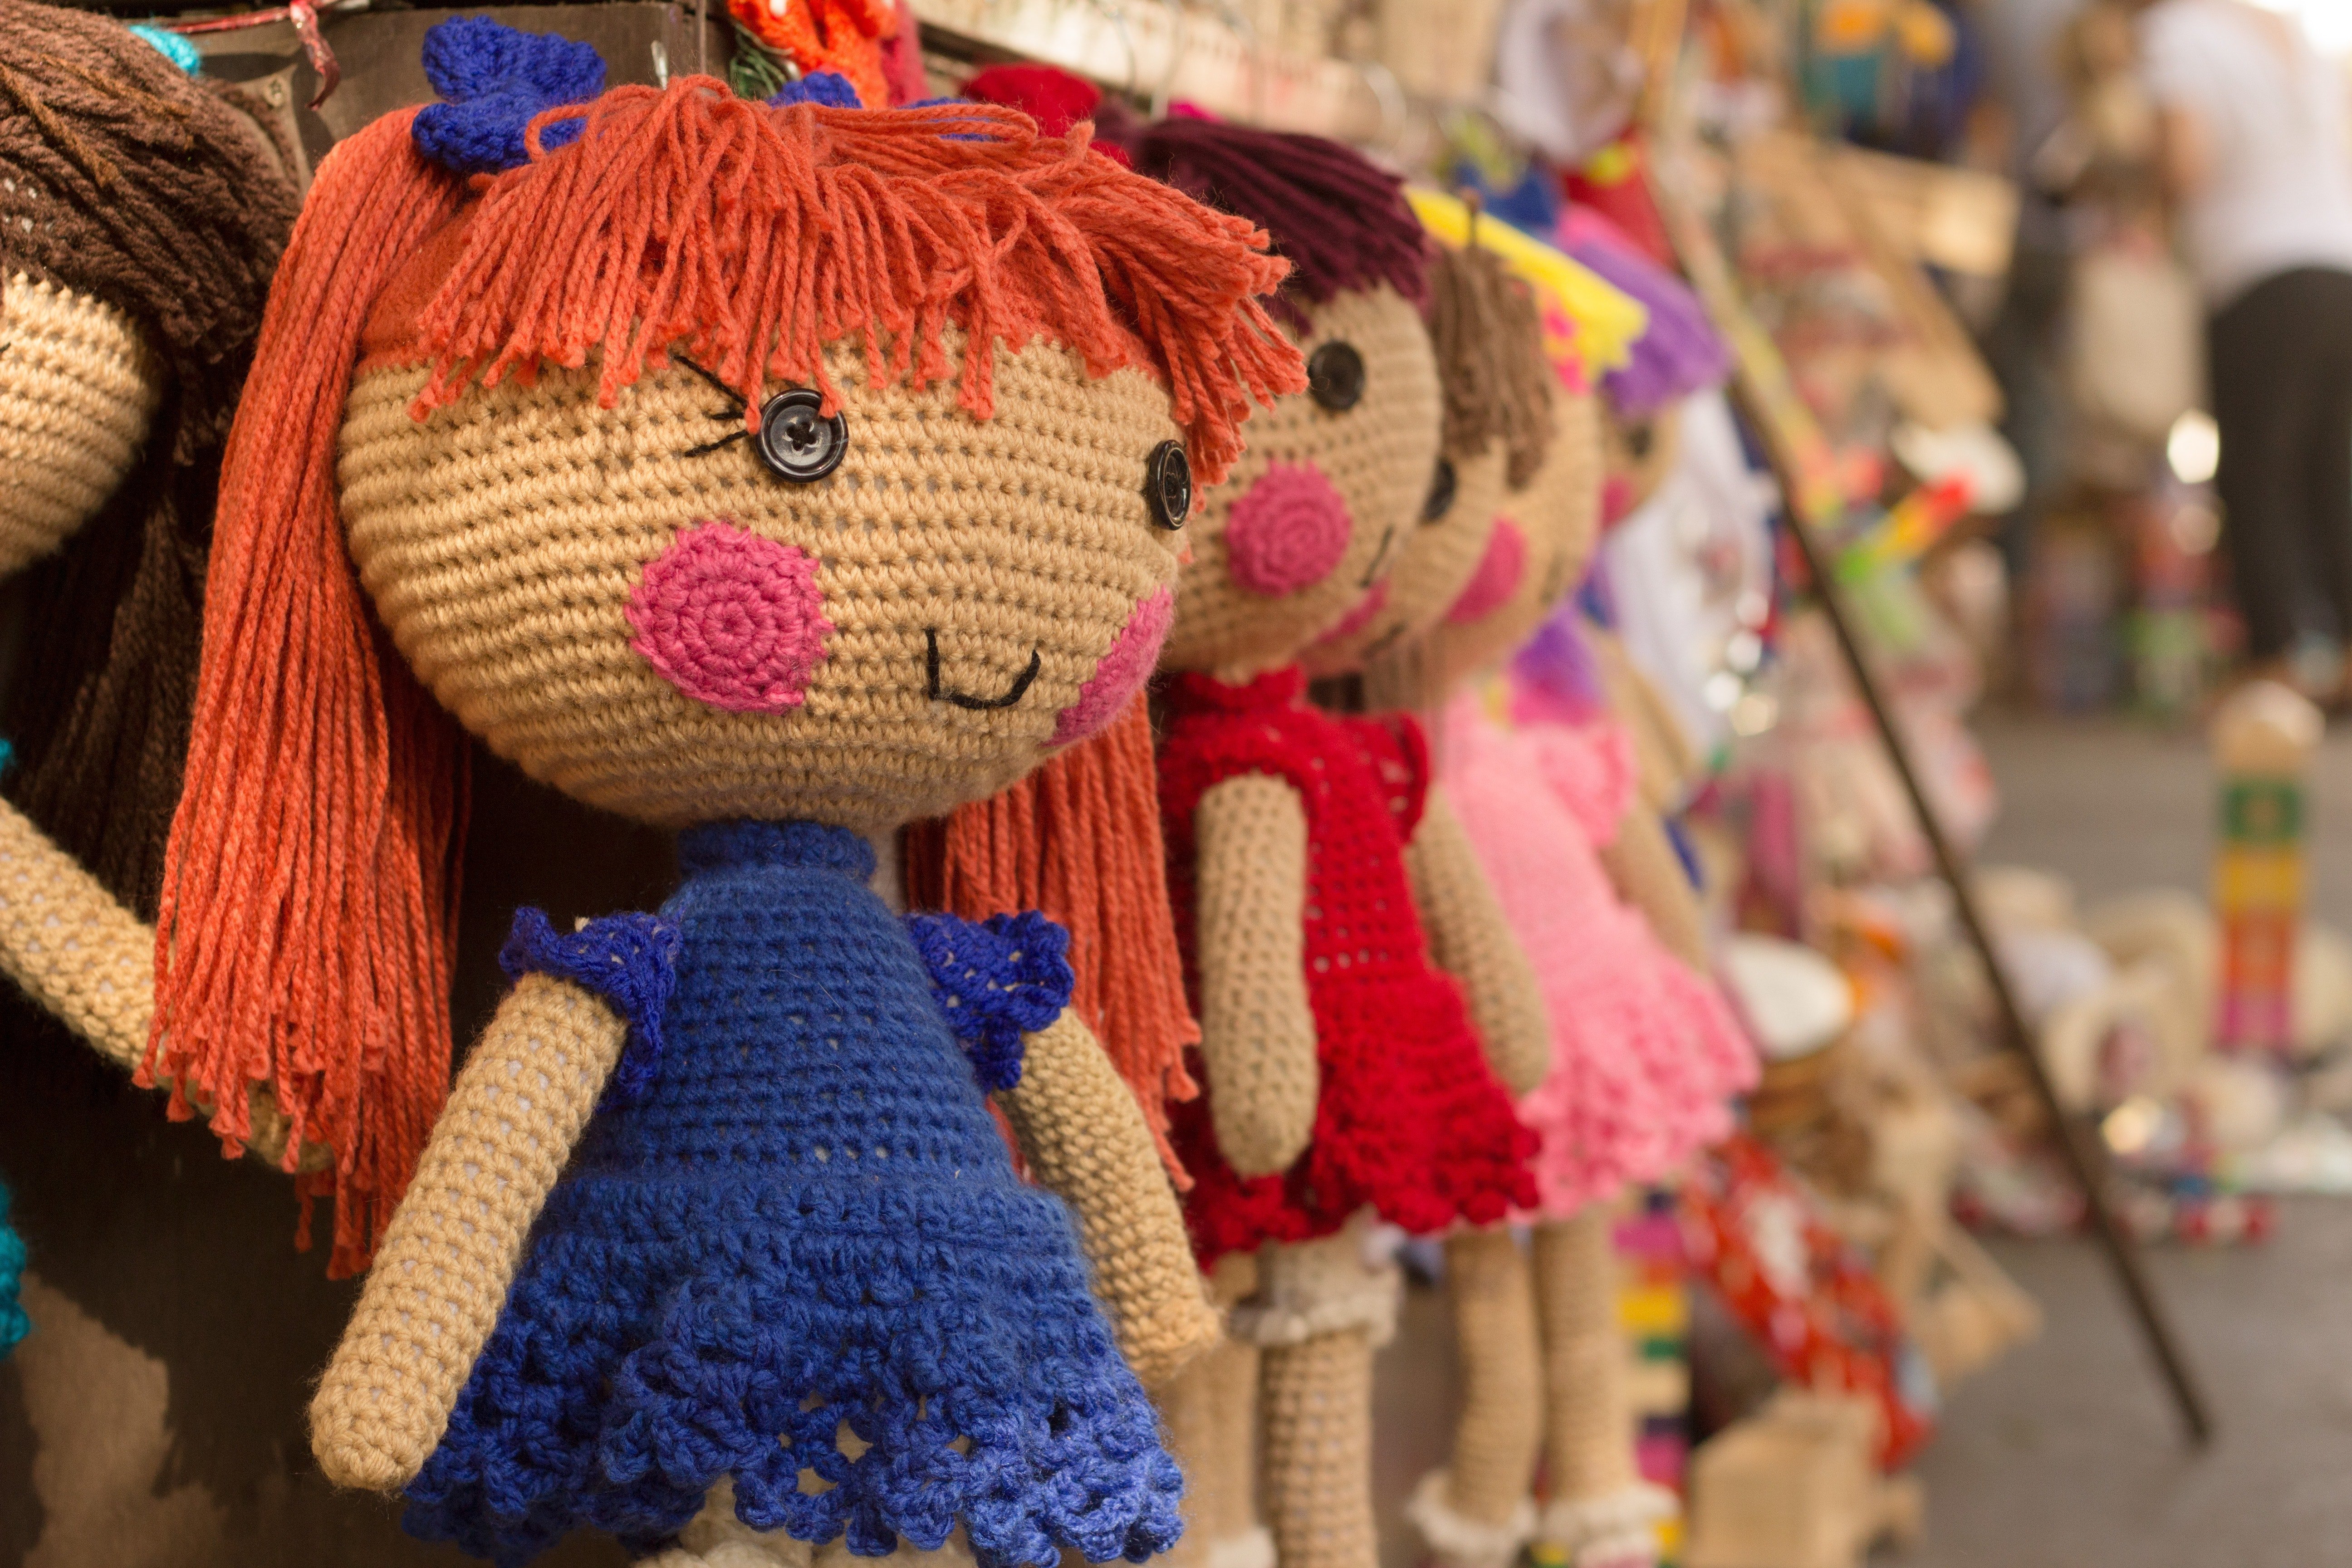 Crochet dolls. | Source: David López/Pexels